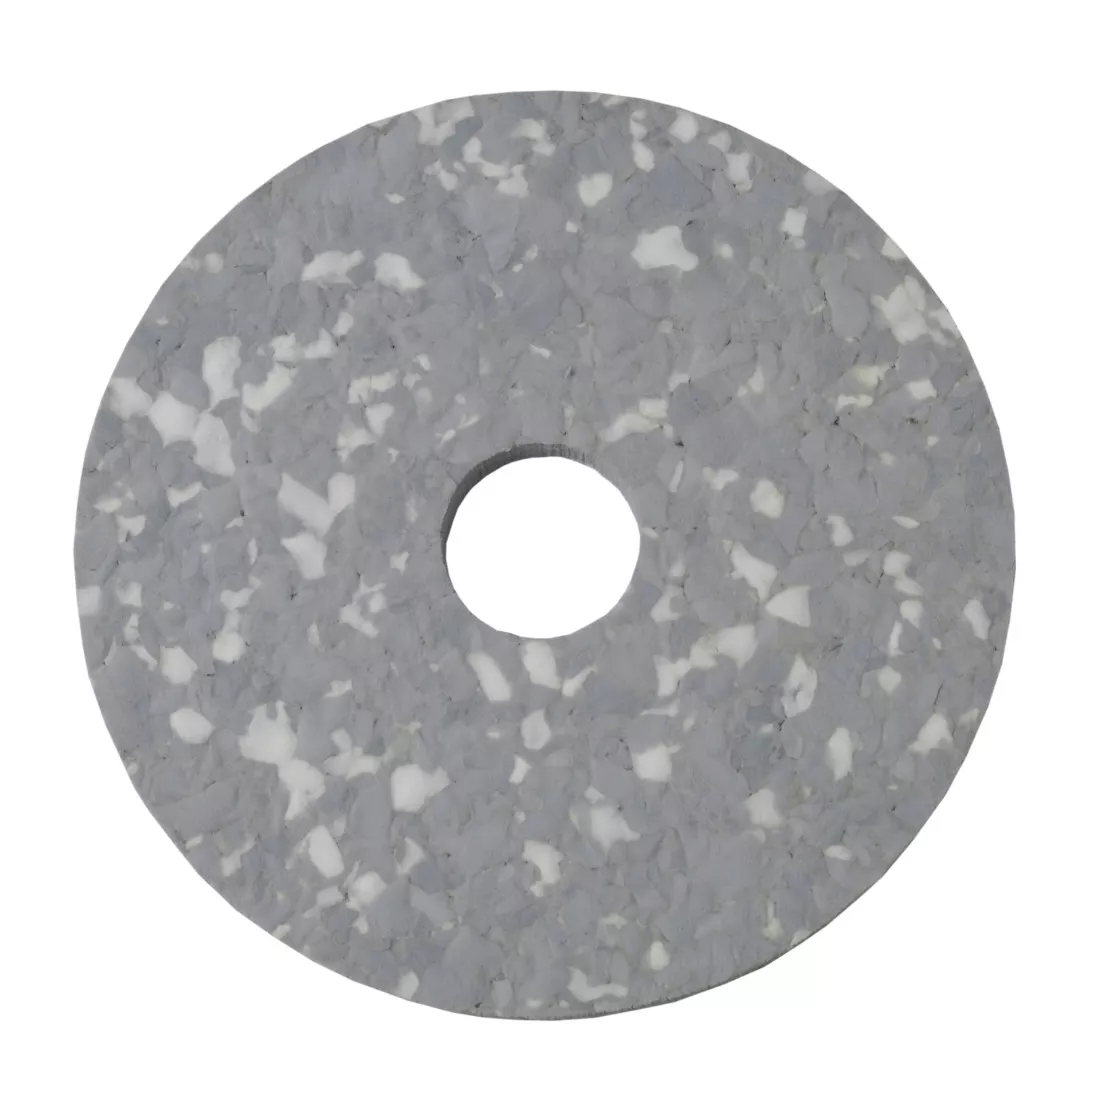 3M™ Melamine Floor Pad, Grey/White, 330 mm, 5/Case